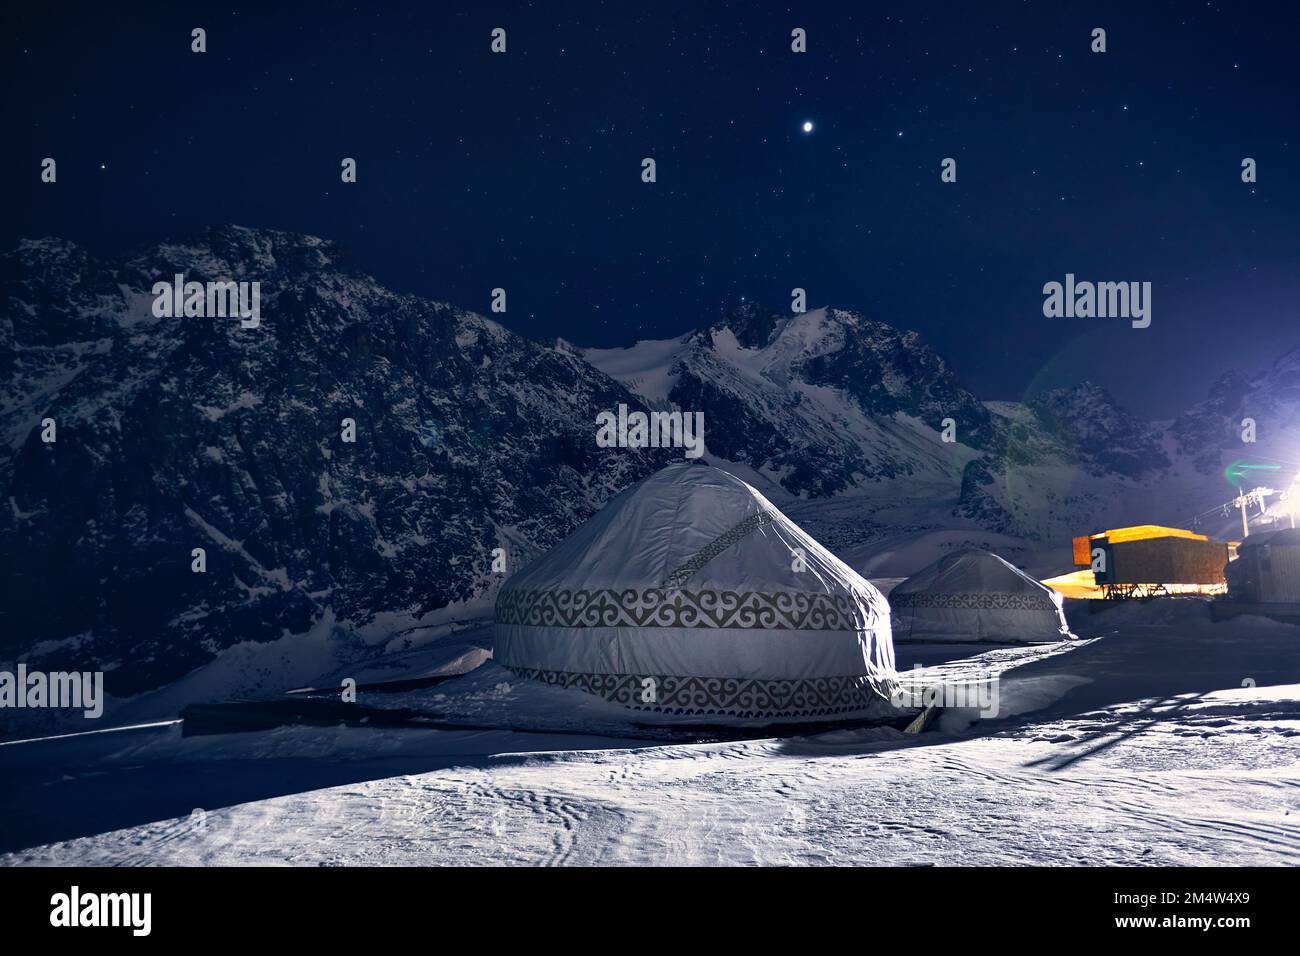 Yurt or yurta nomadic house at Ski resort Shymbulak in Almaty, Kazakhstan. Winter night astrophotography with stars against mountain peak Stock Photo